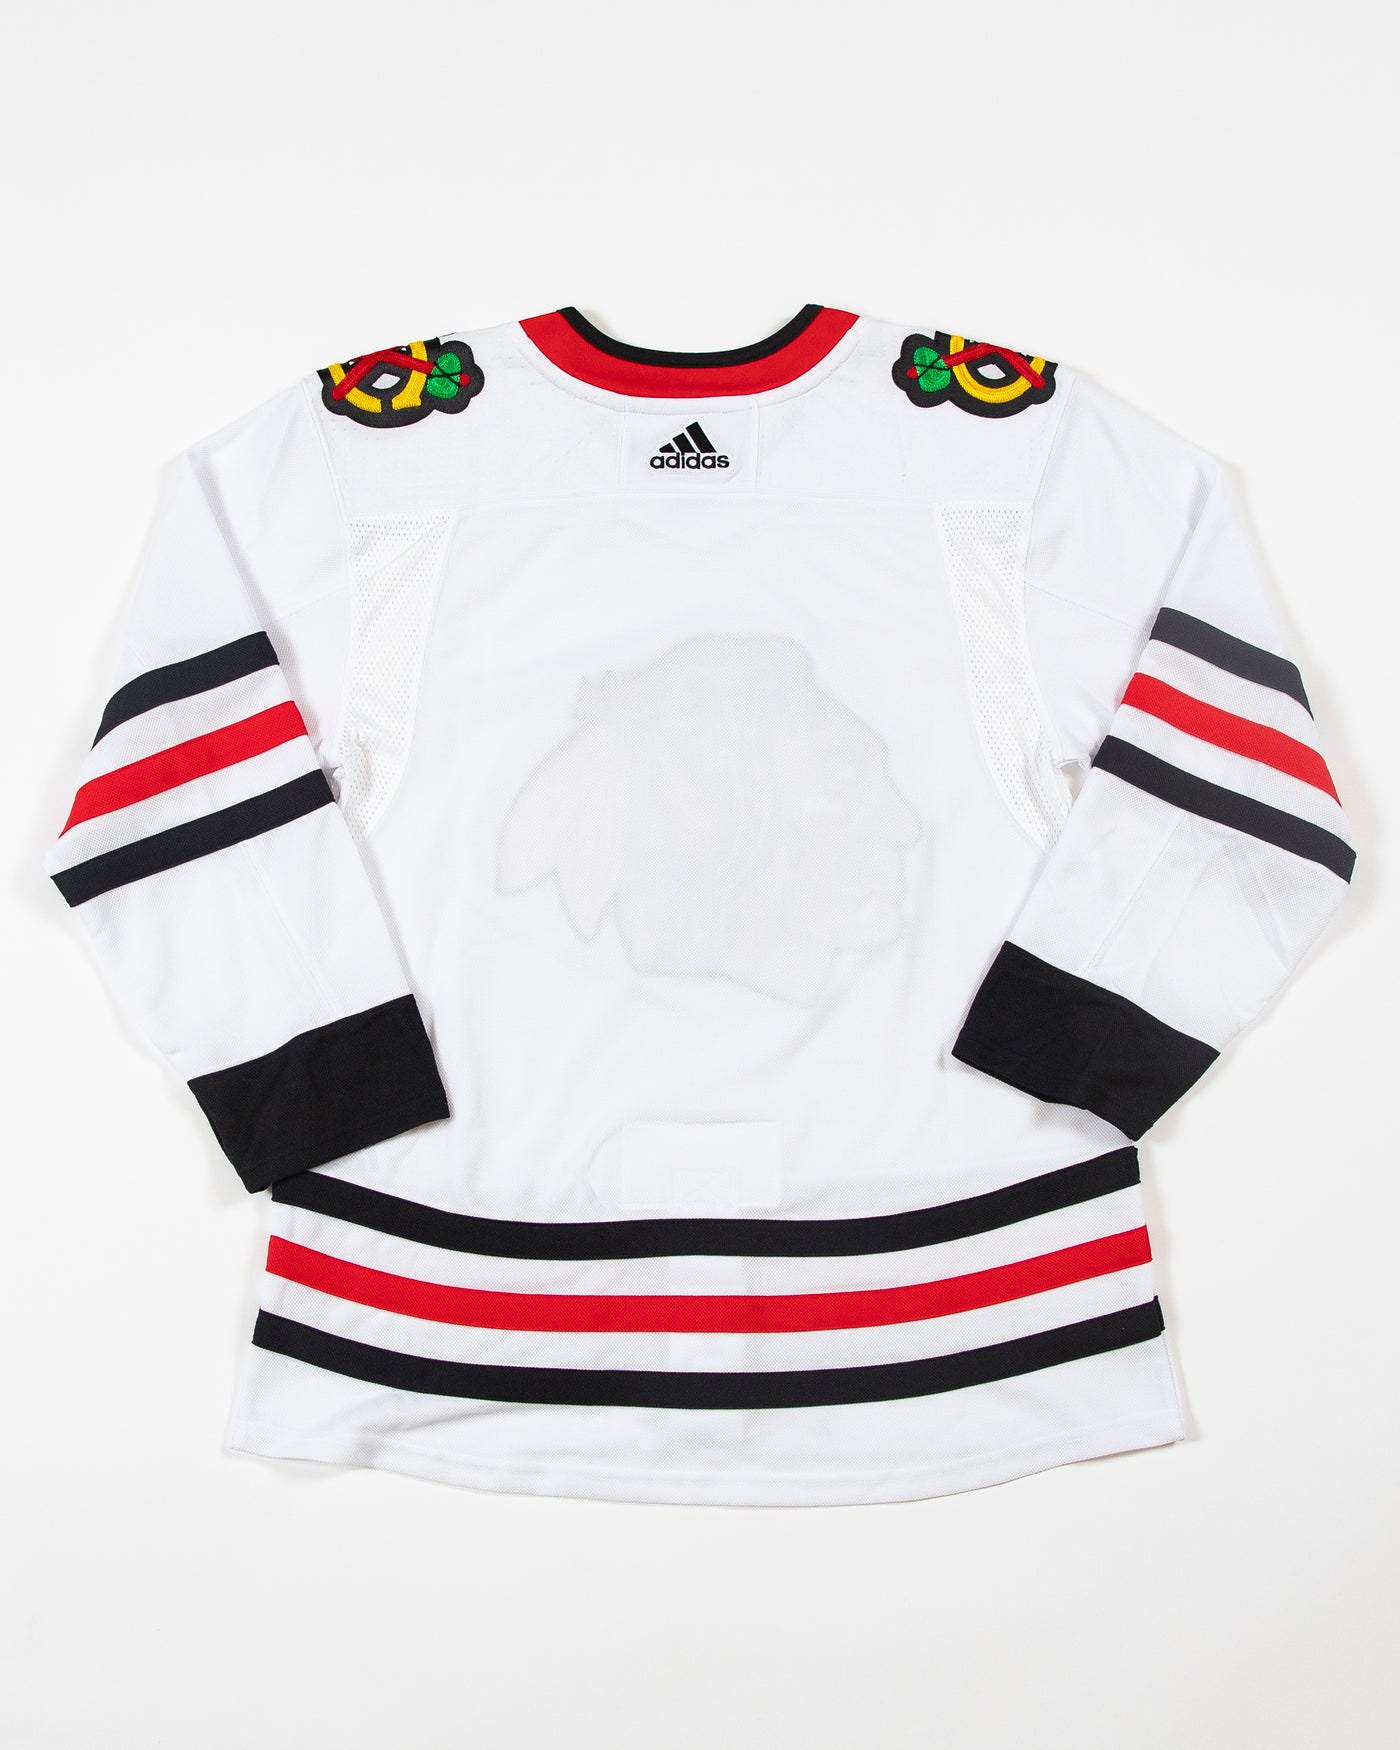 Connor Bedard Chicago Blackhawks Adidas Primegreen Authentic NHL Hockey Jersey, Away / L/52